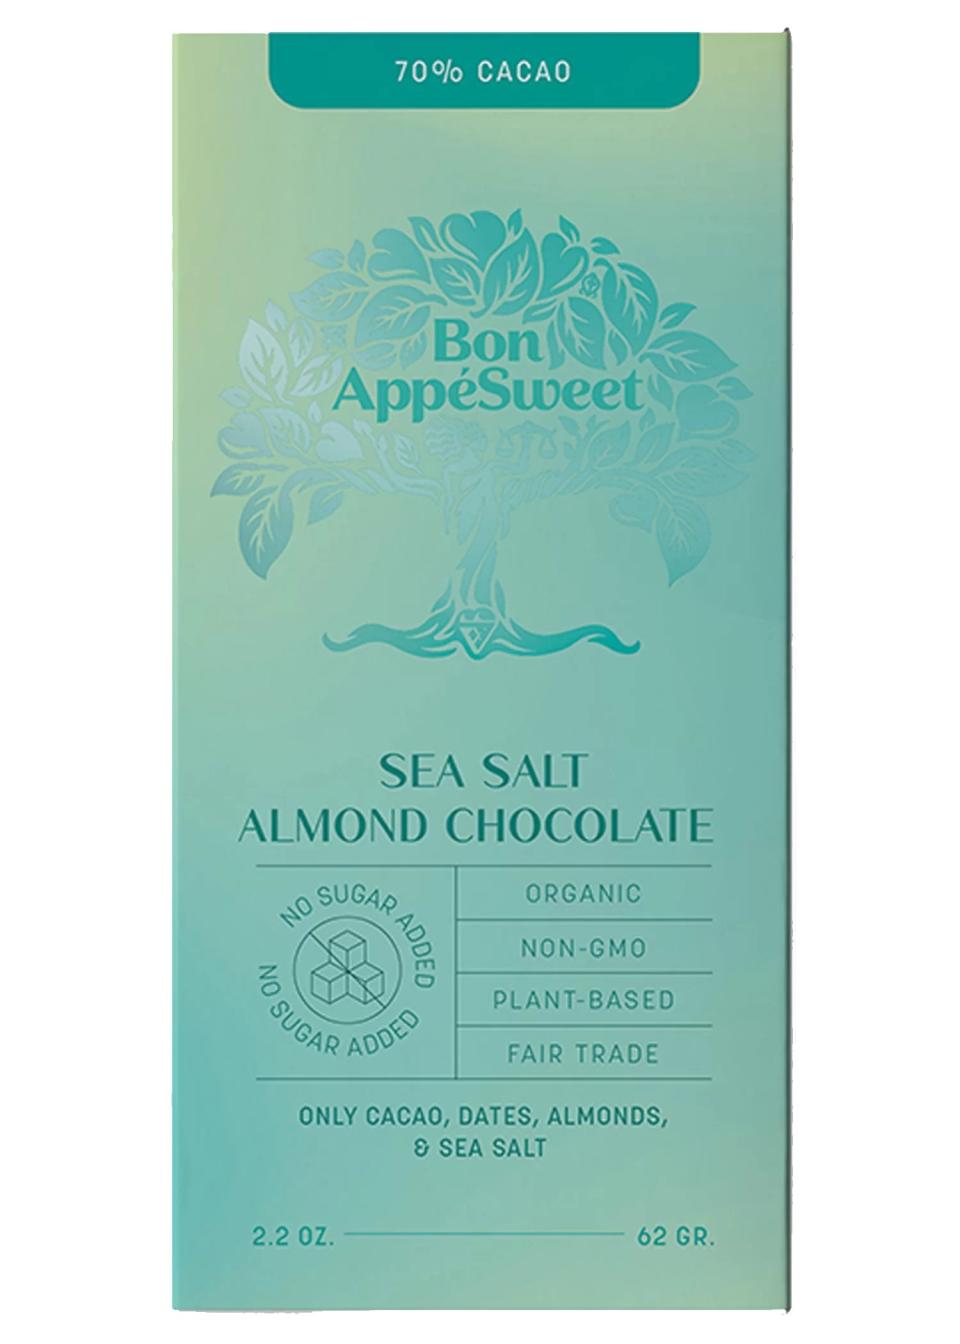 Bon AppéSweet chocolate bar